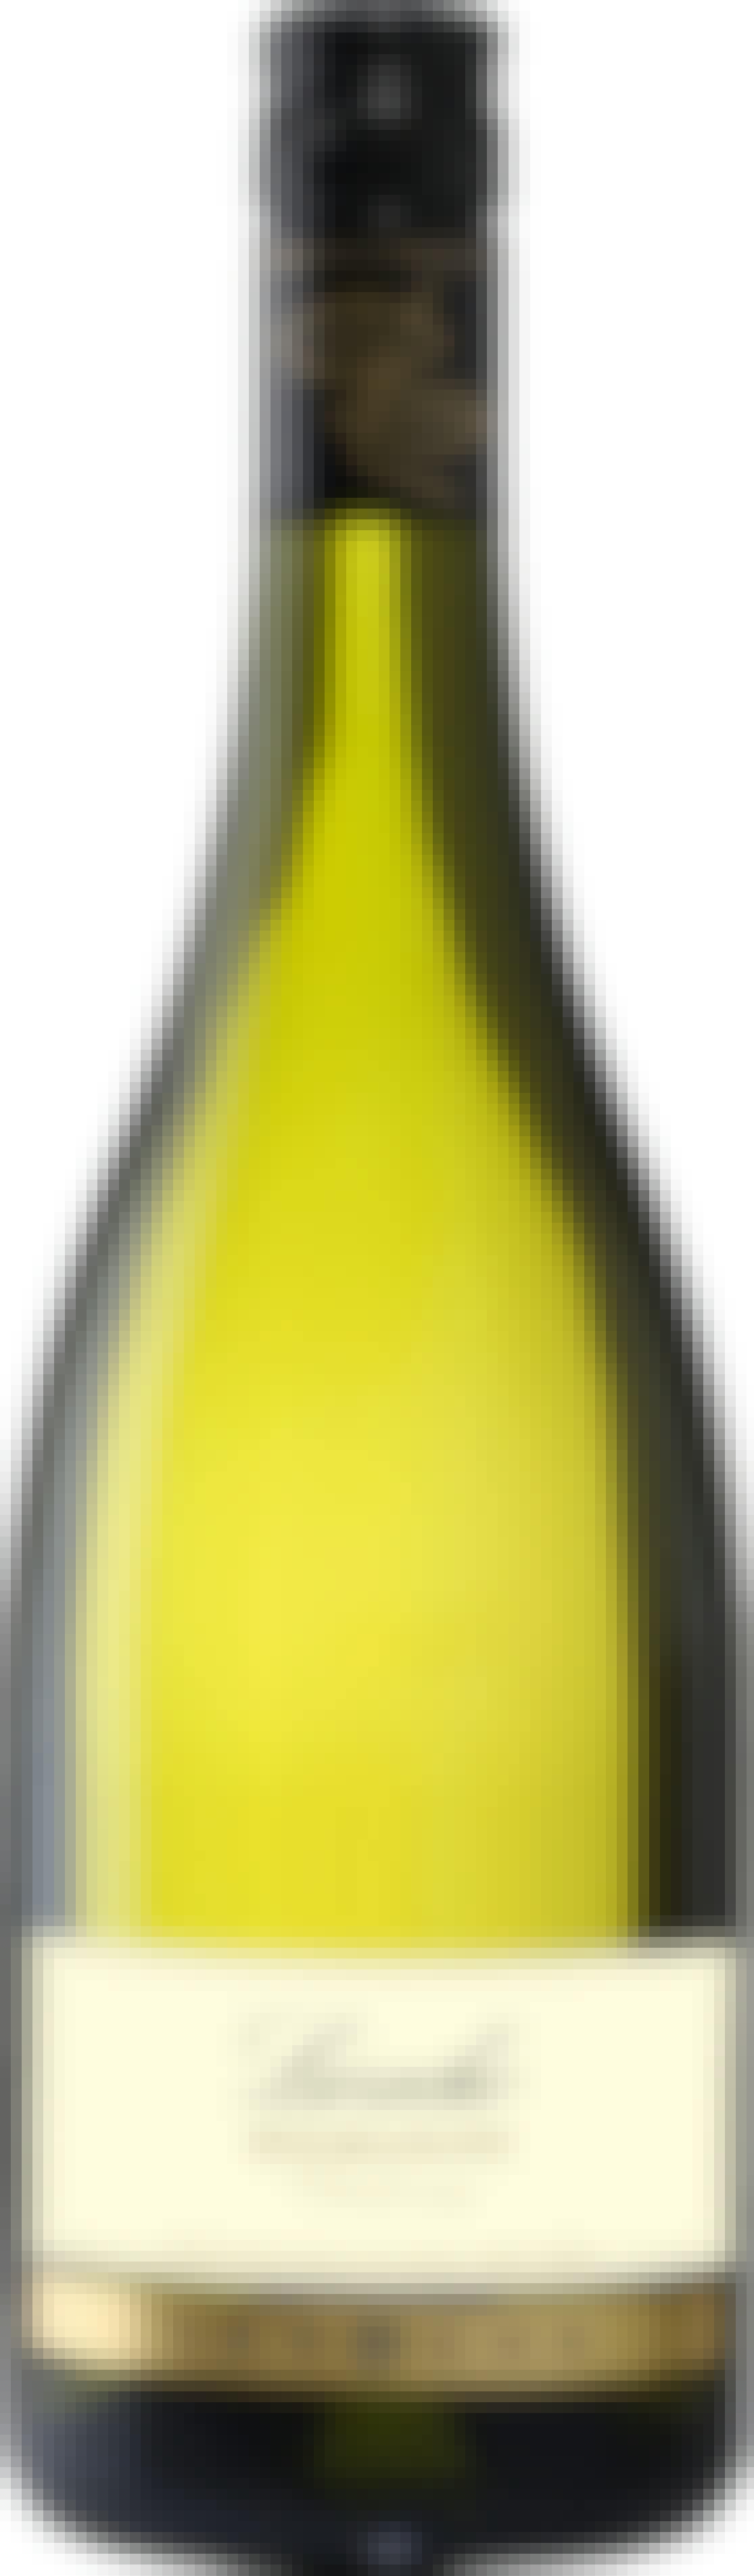 Laroche Chardonnay 2017 750ml